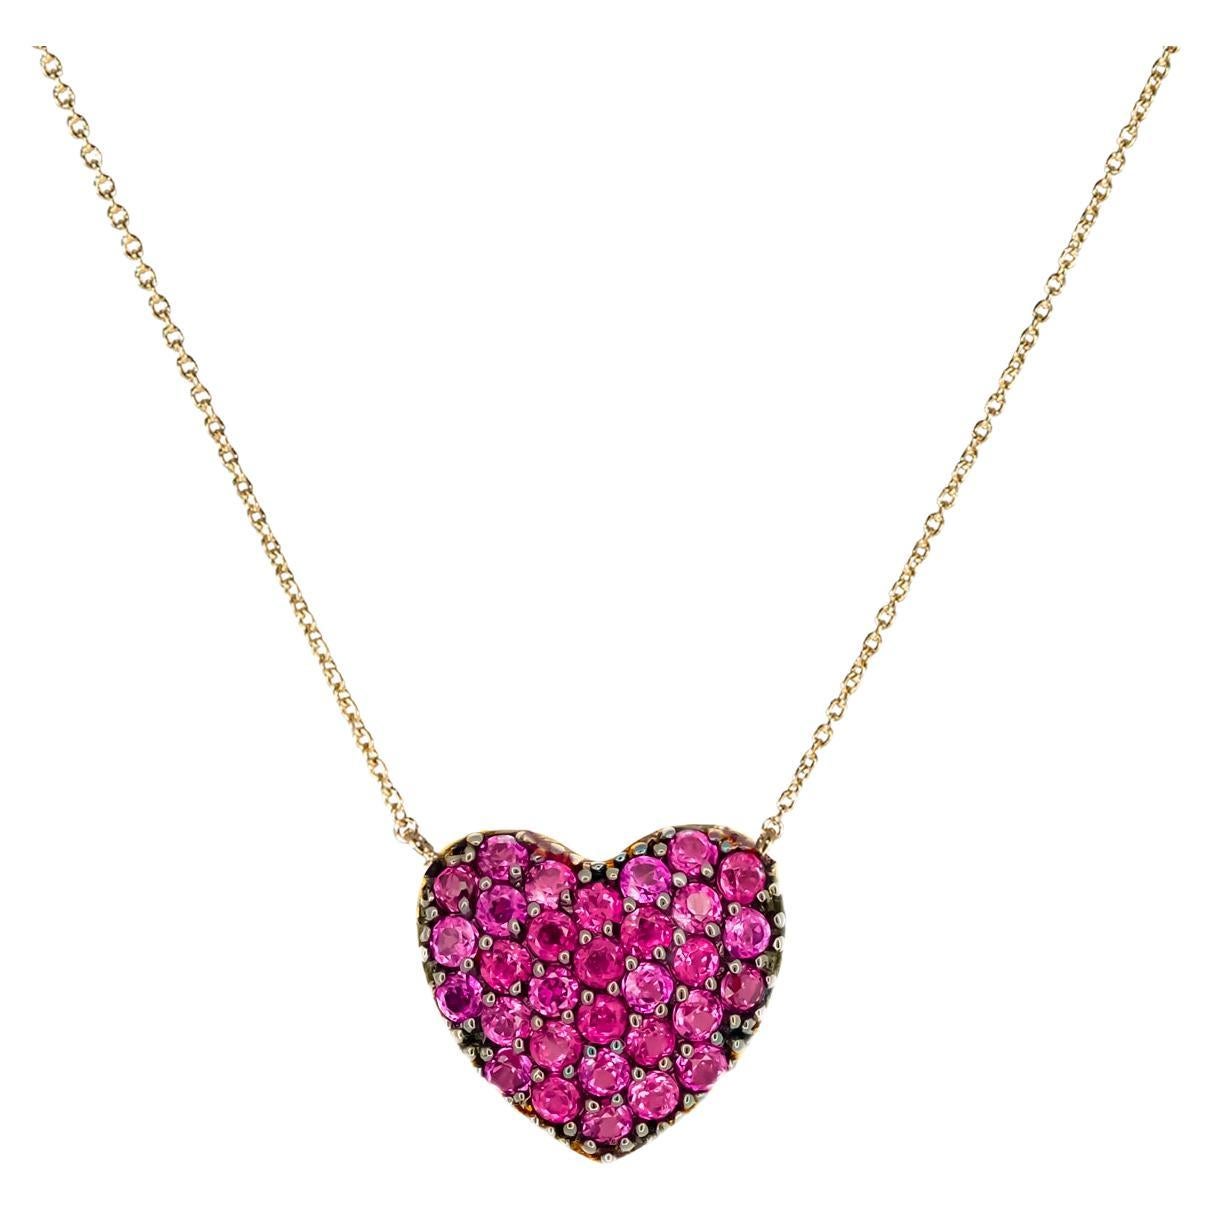 Heart shaped 14k gold pendant necklace. 